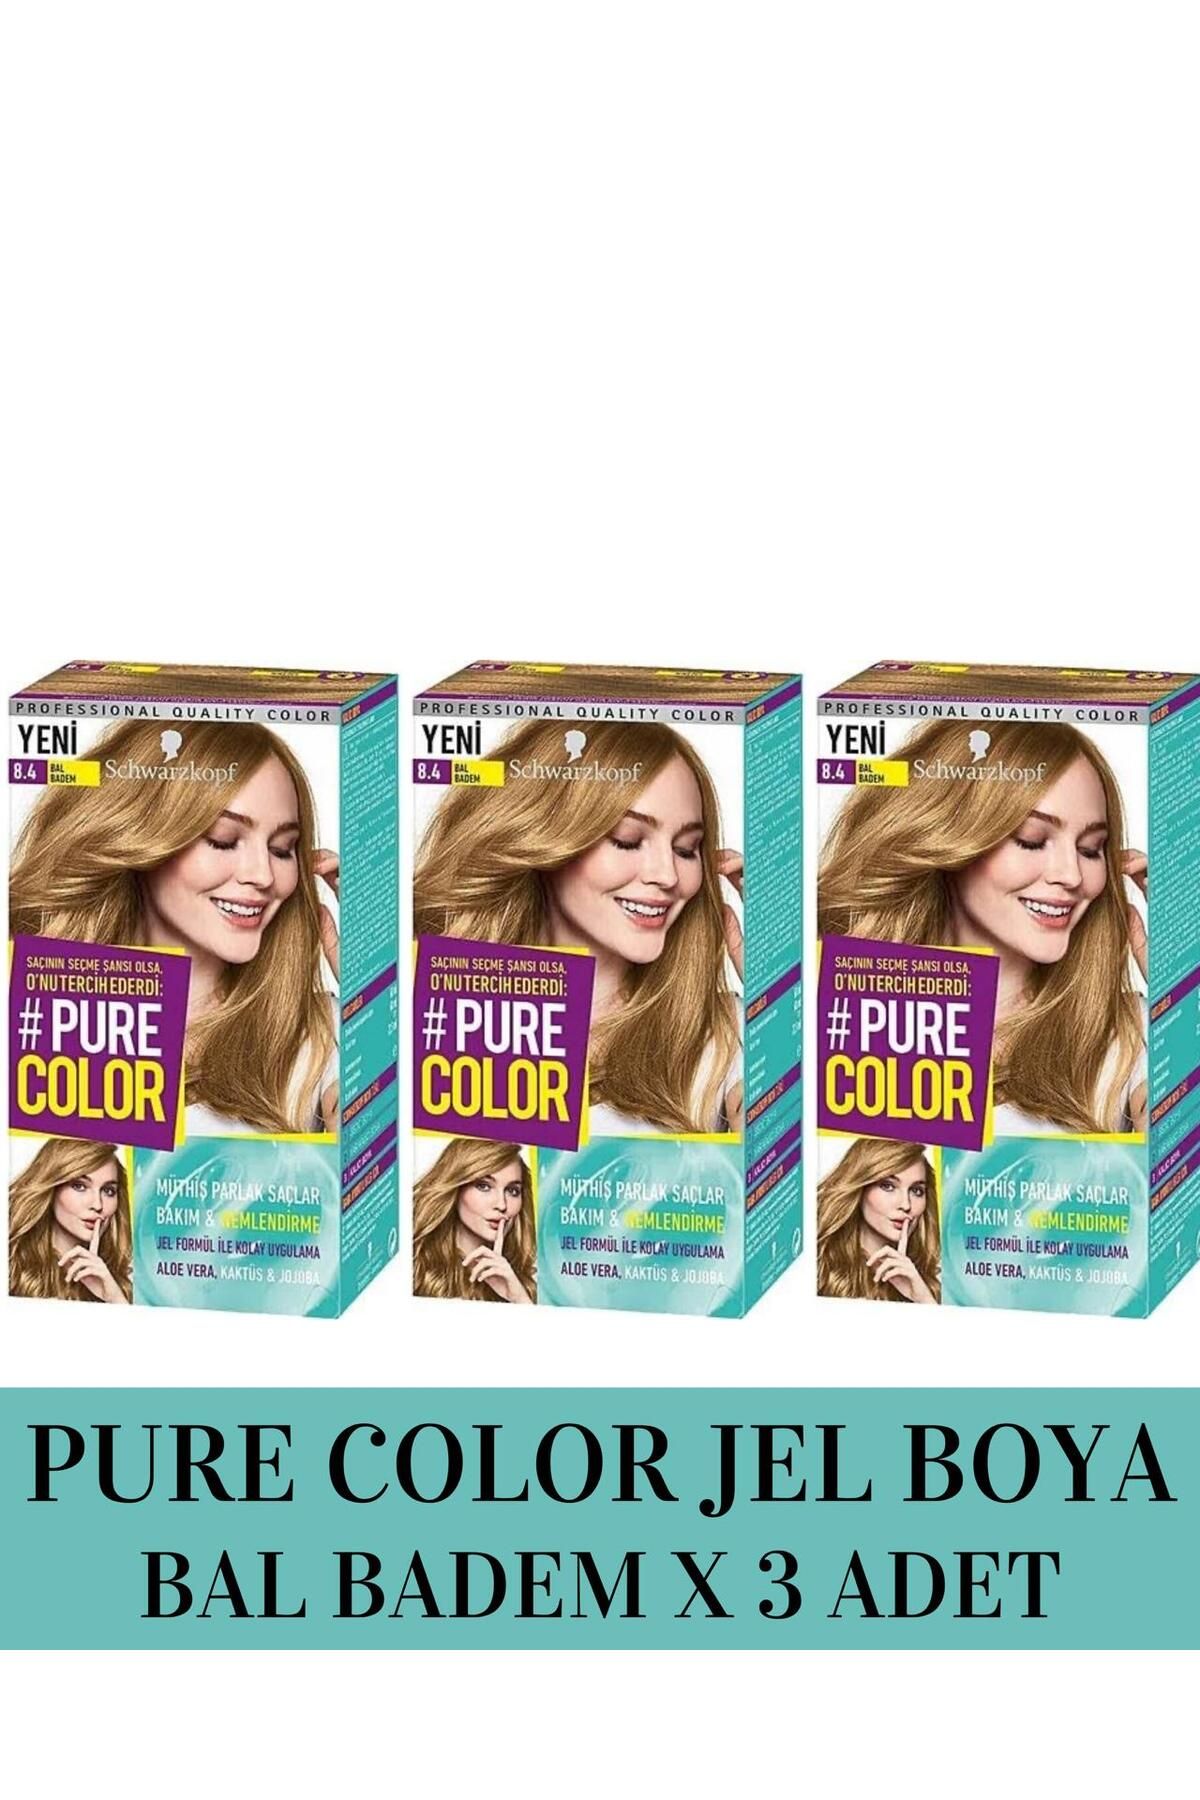 Pure Color Schwarzkopf Pure Color Saç Boyası 8.4 BAL BADEM X 3 Adet